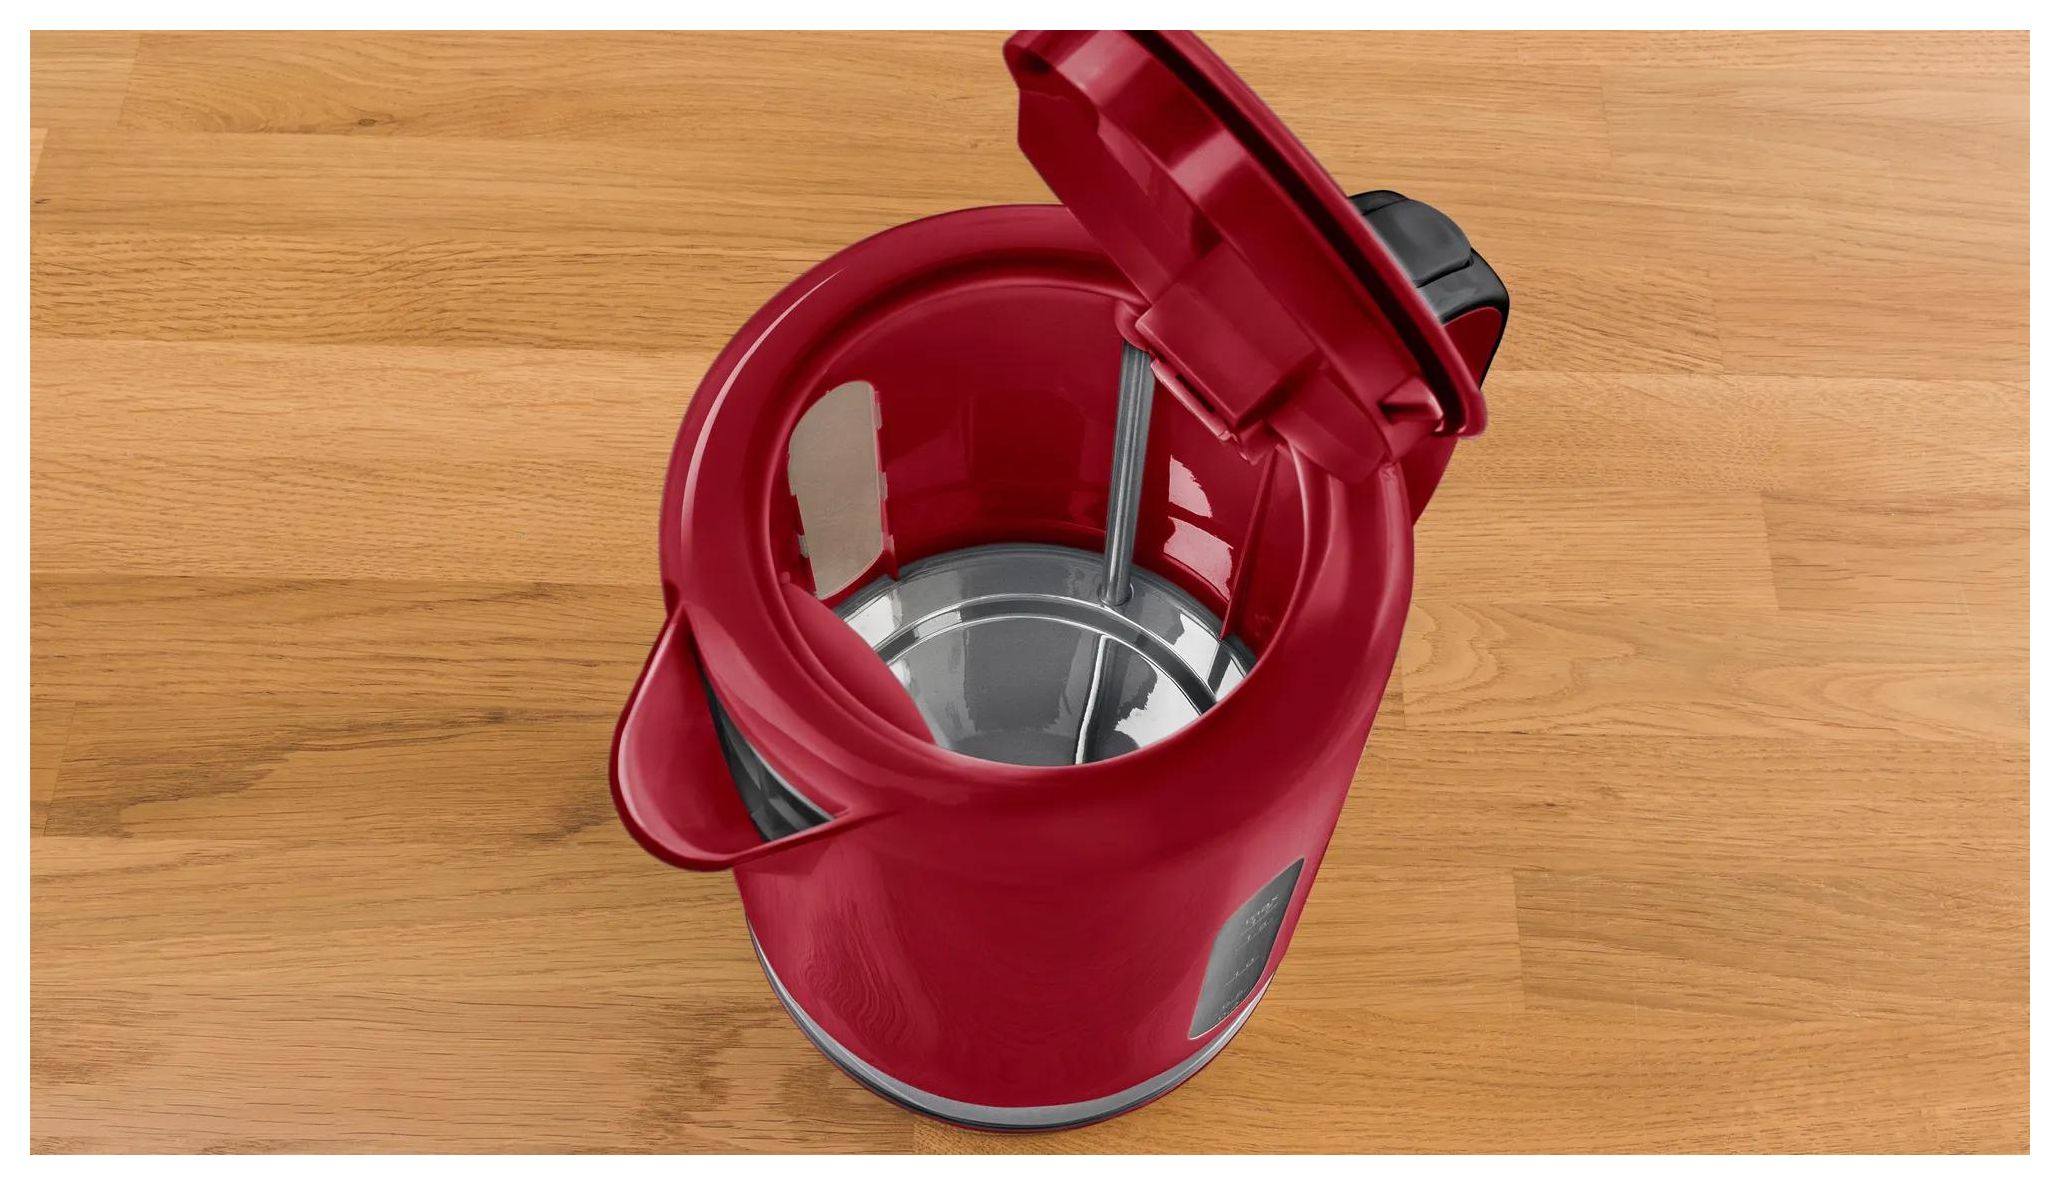 TWK6A514 (Grau, Technomarkt Rot) Bosch 1,7 2200 expert W von l Wasserkocher